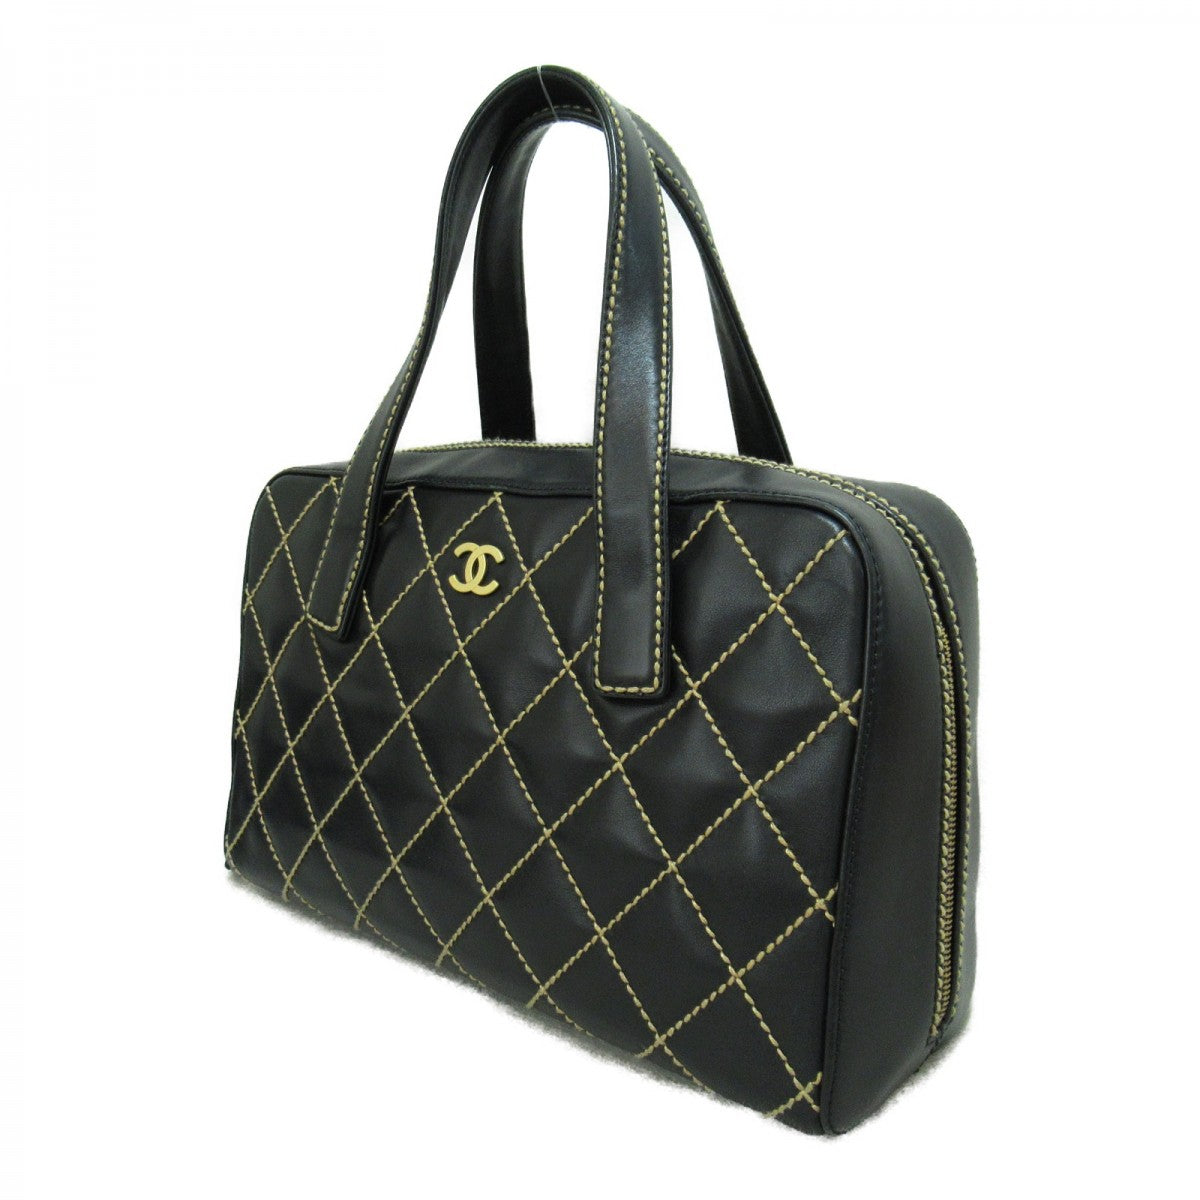 Surpique Leather Handbag